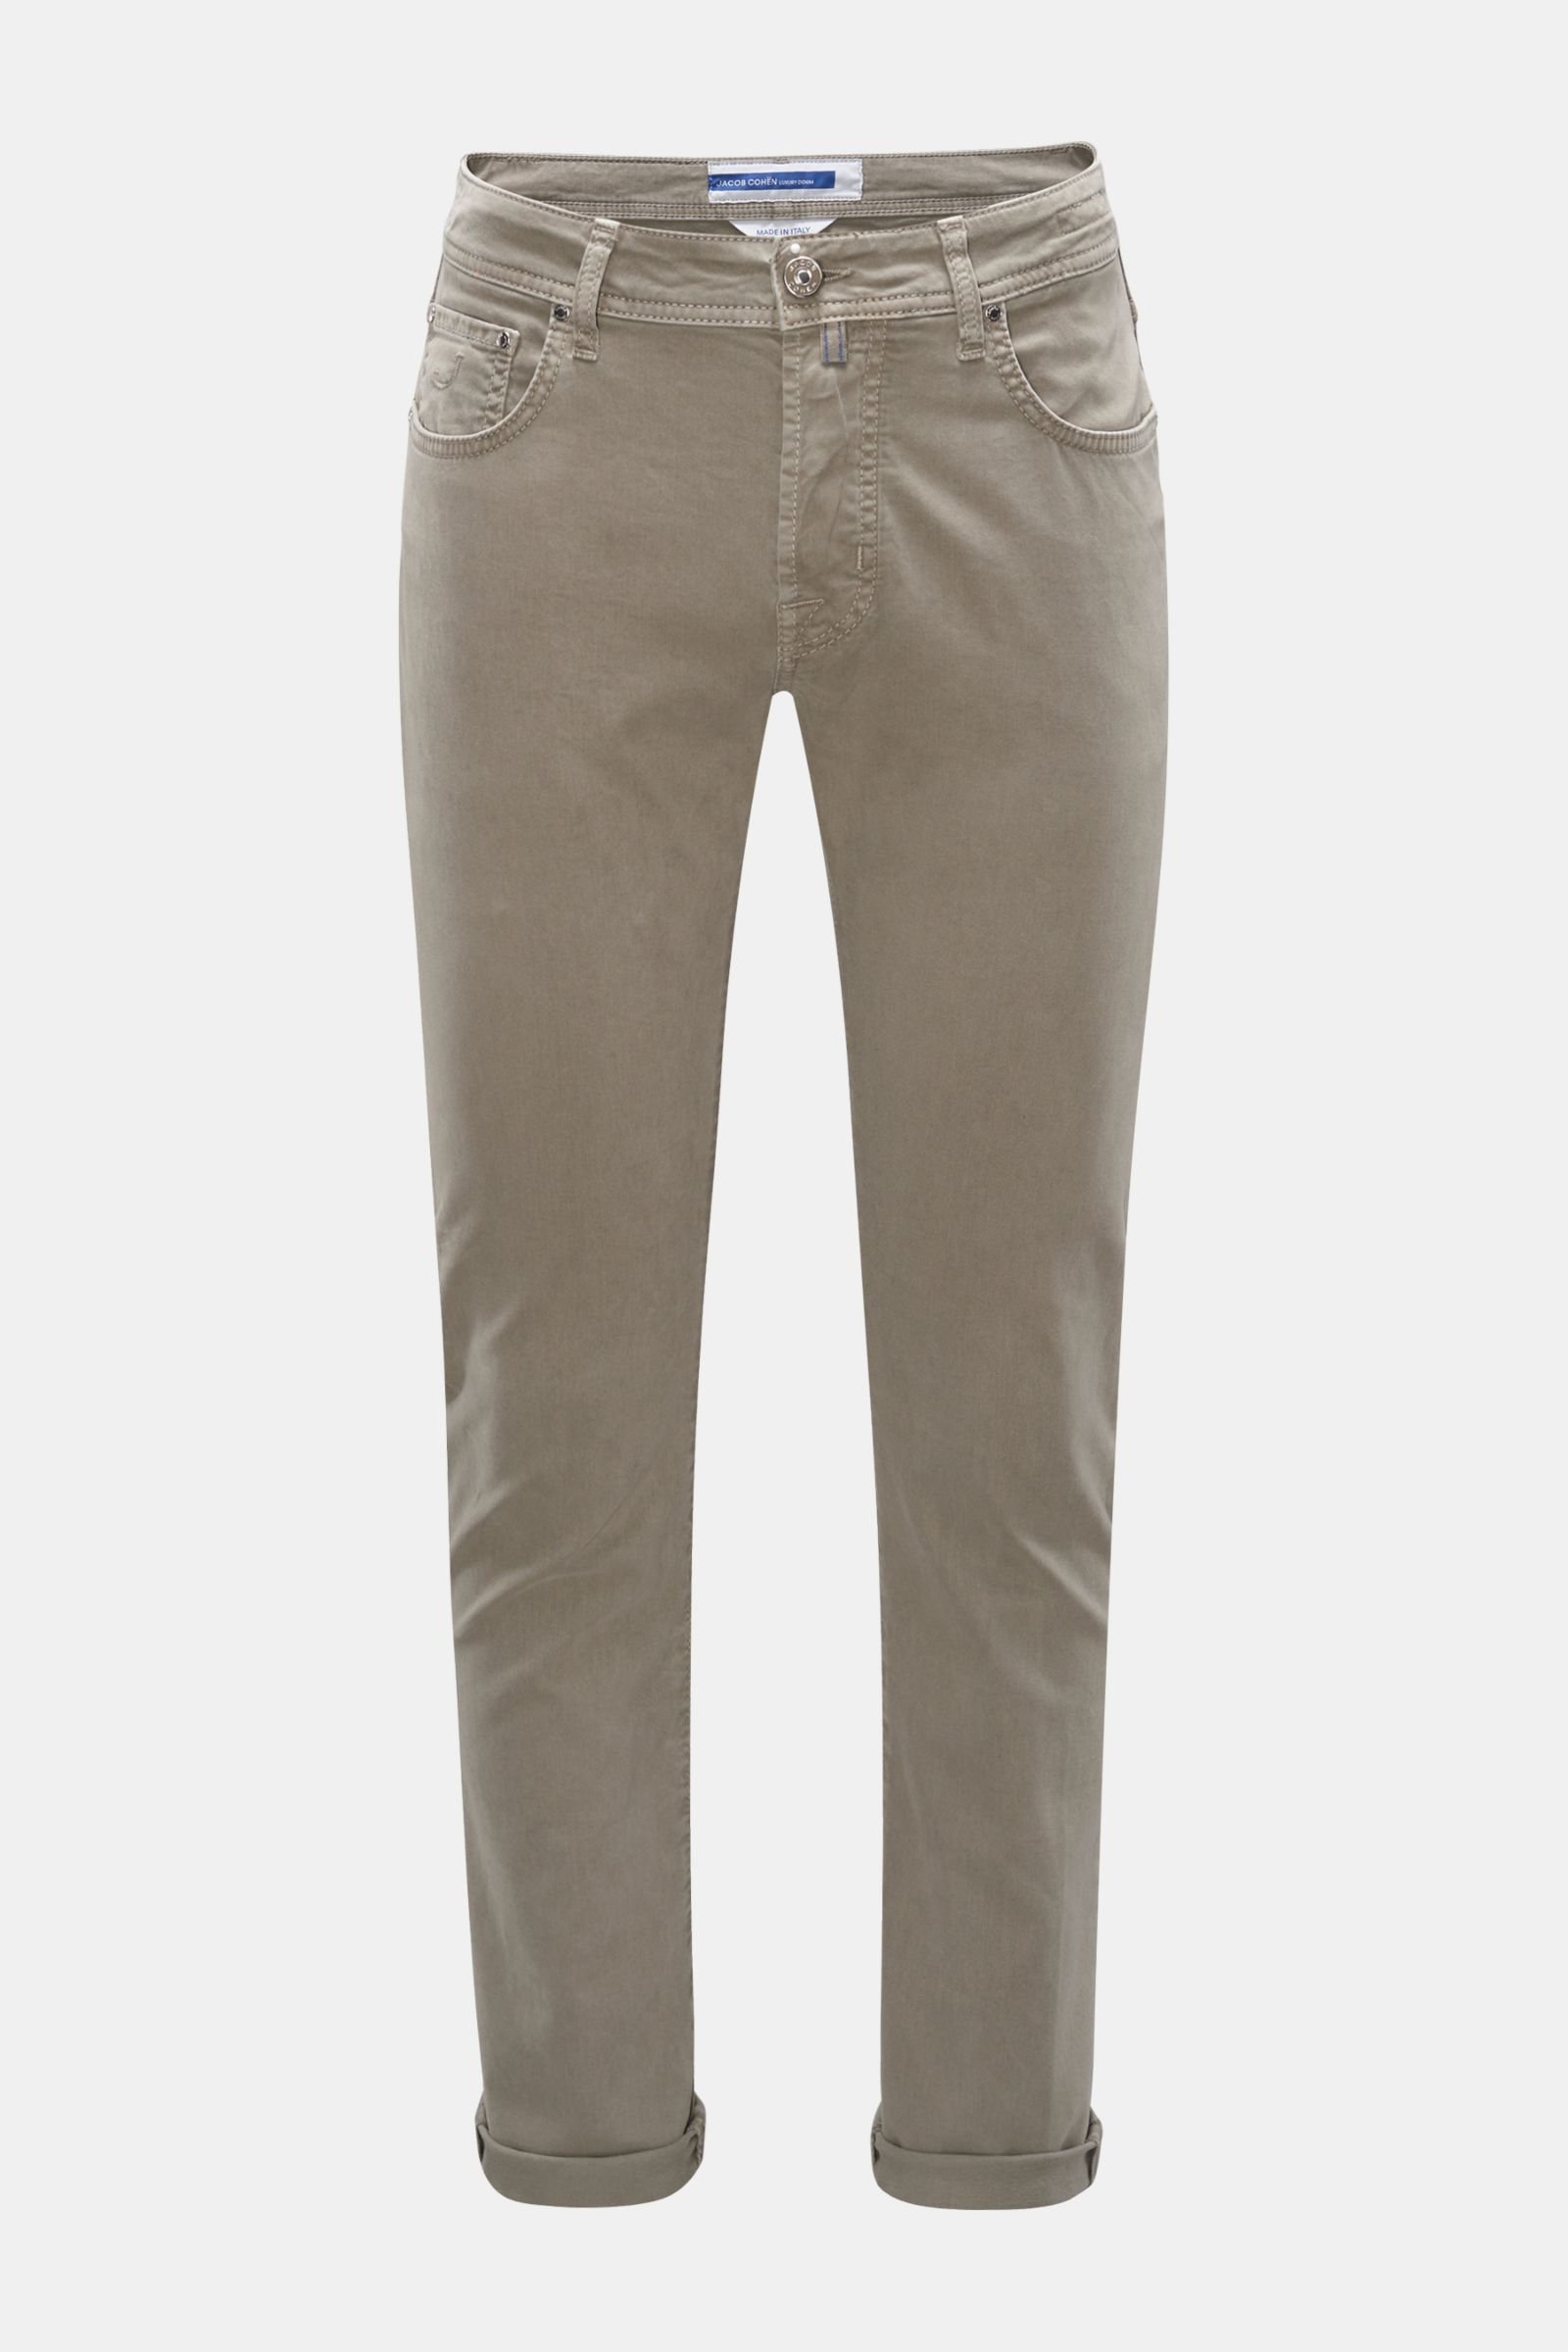 Cotton trousers 'Bard' grey (previously J688)